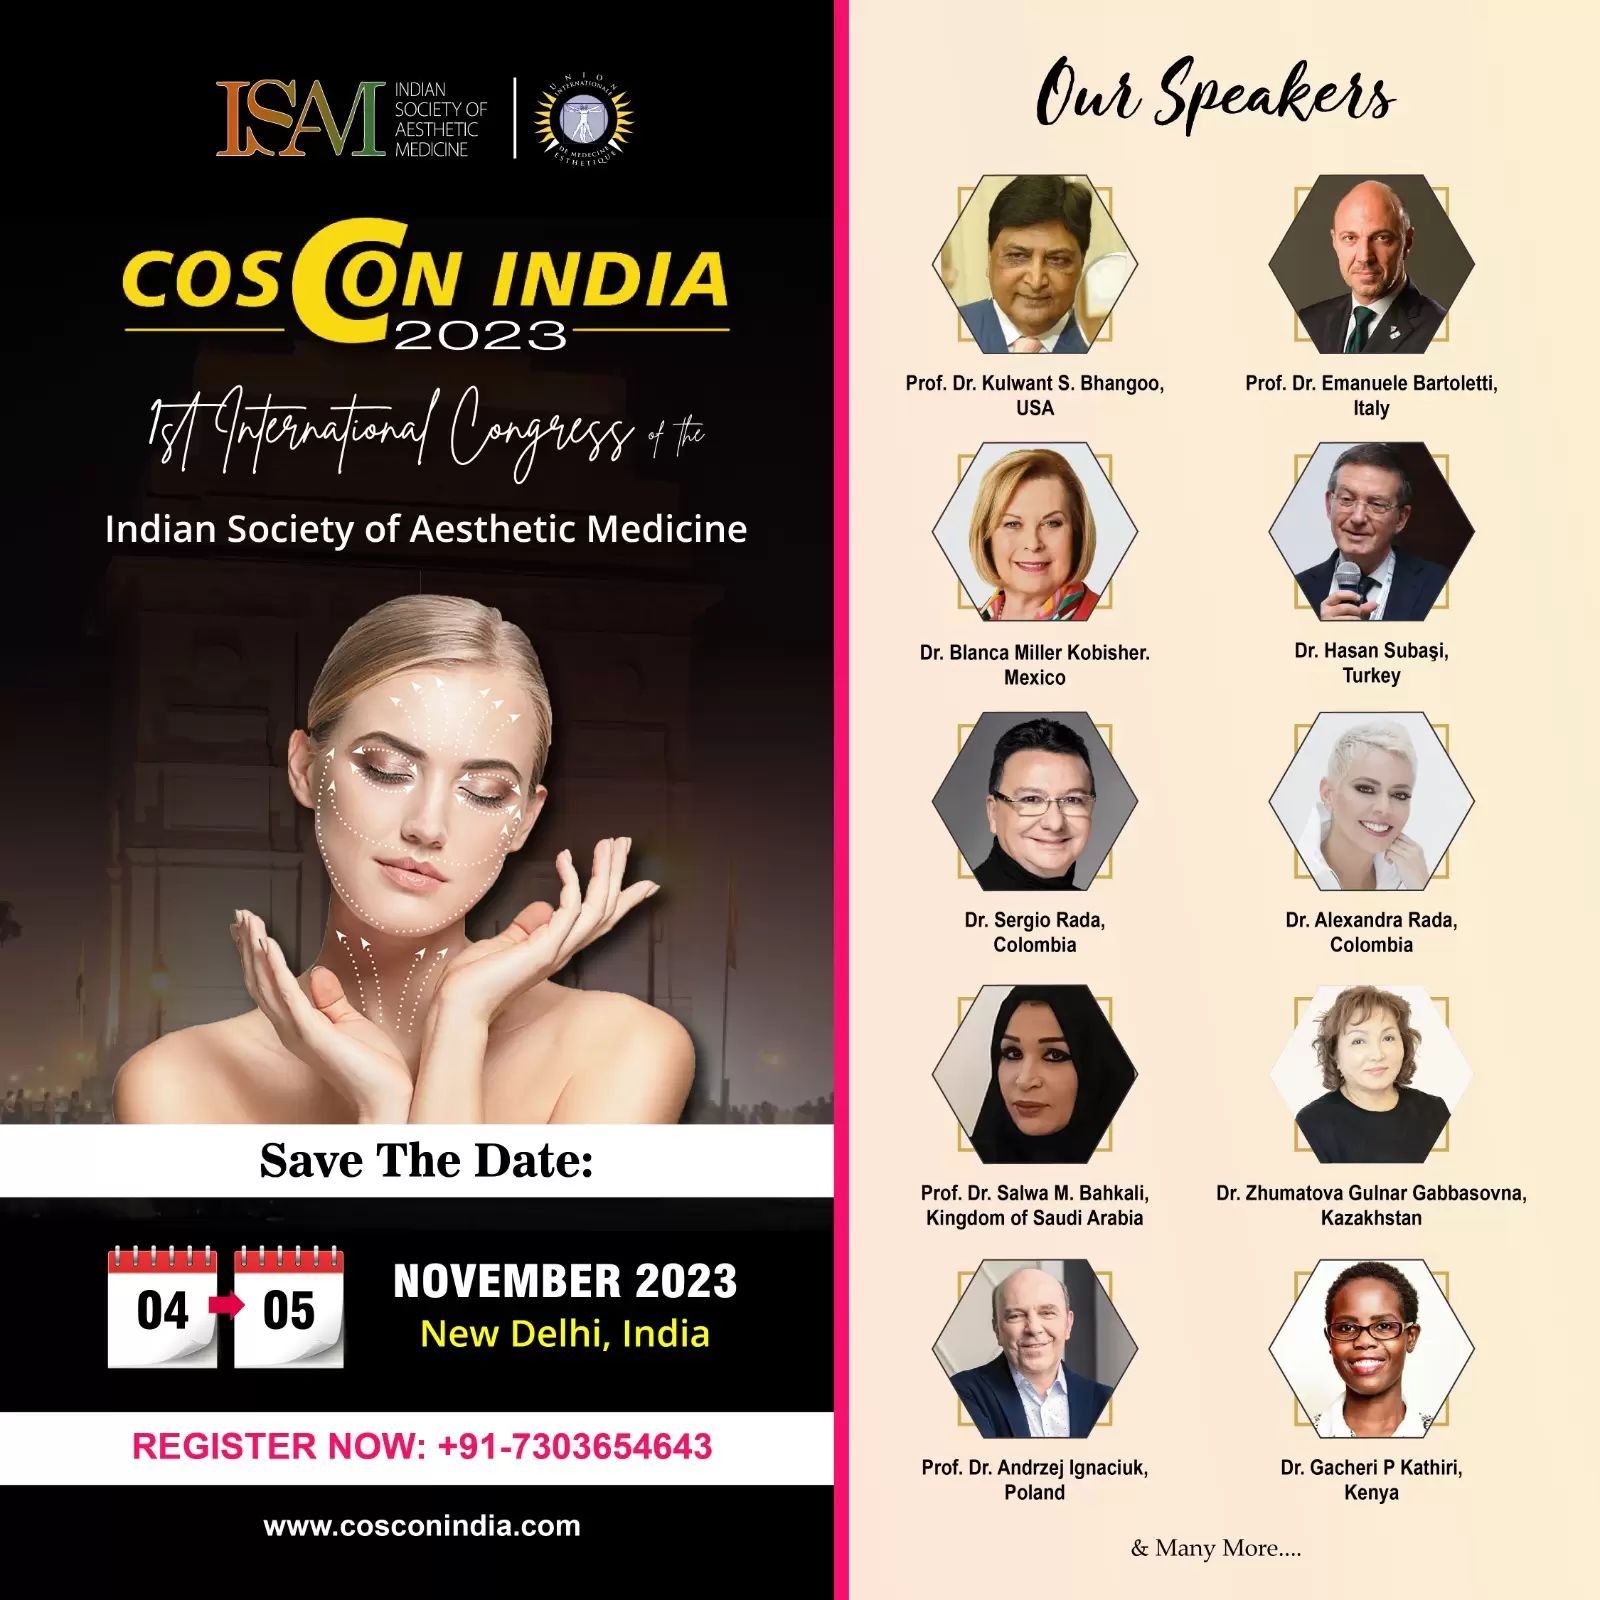 Indian Society of Aesthetic Medicine: Coscon India 2023